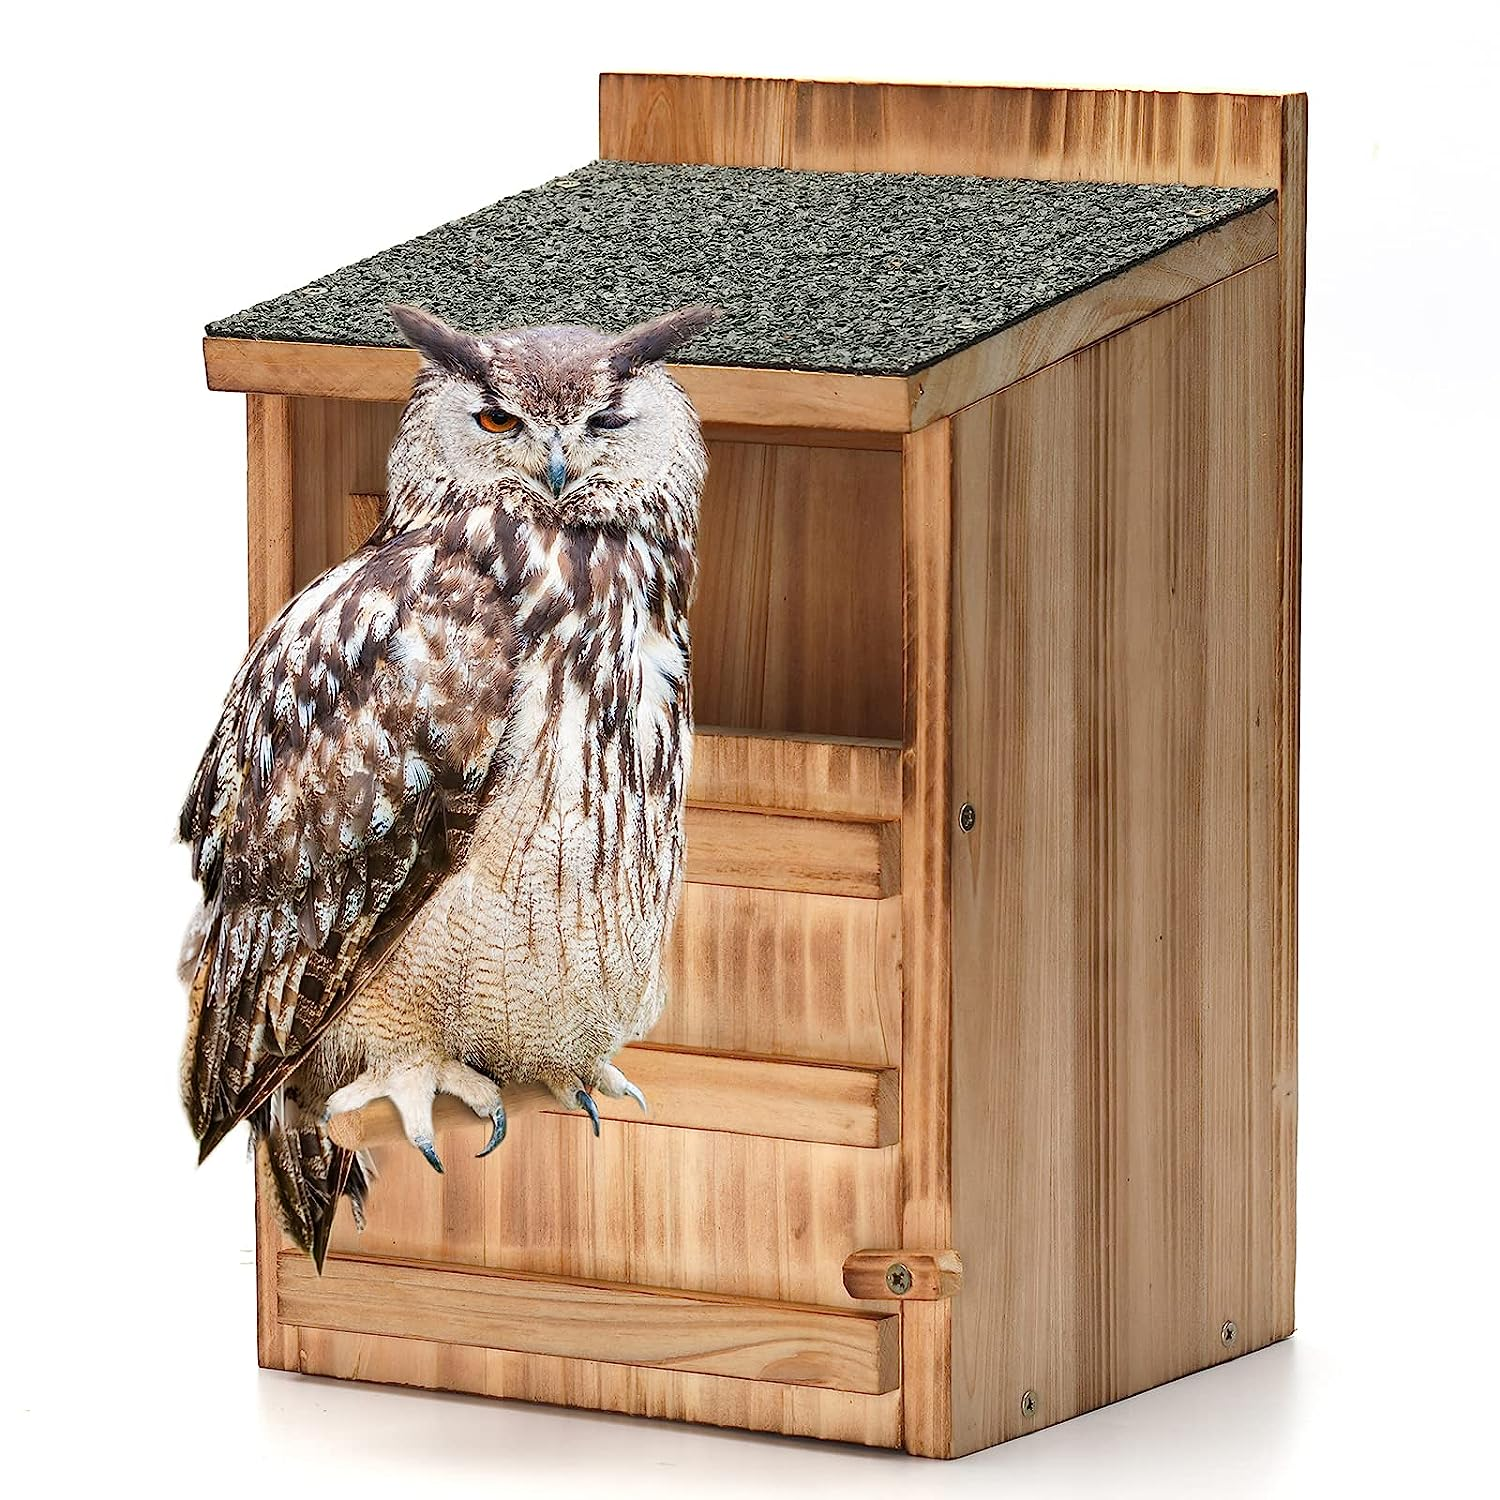 House for Outdoors Screech Owl Nesting Box Barn Owl Bird House for Outside Large Wooden Rectangular Opening Bird Box